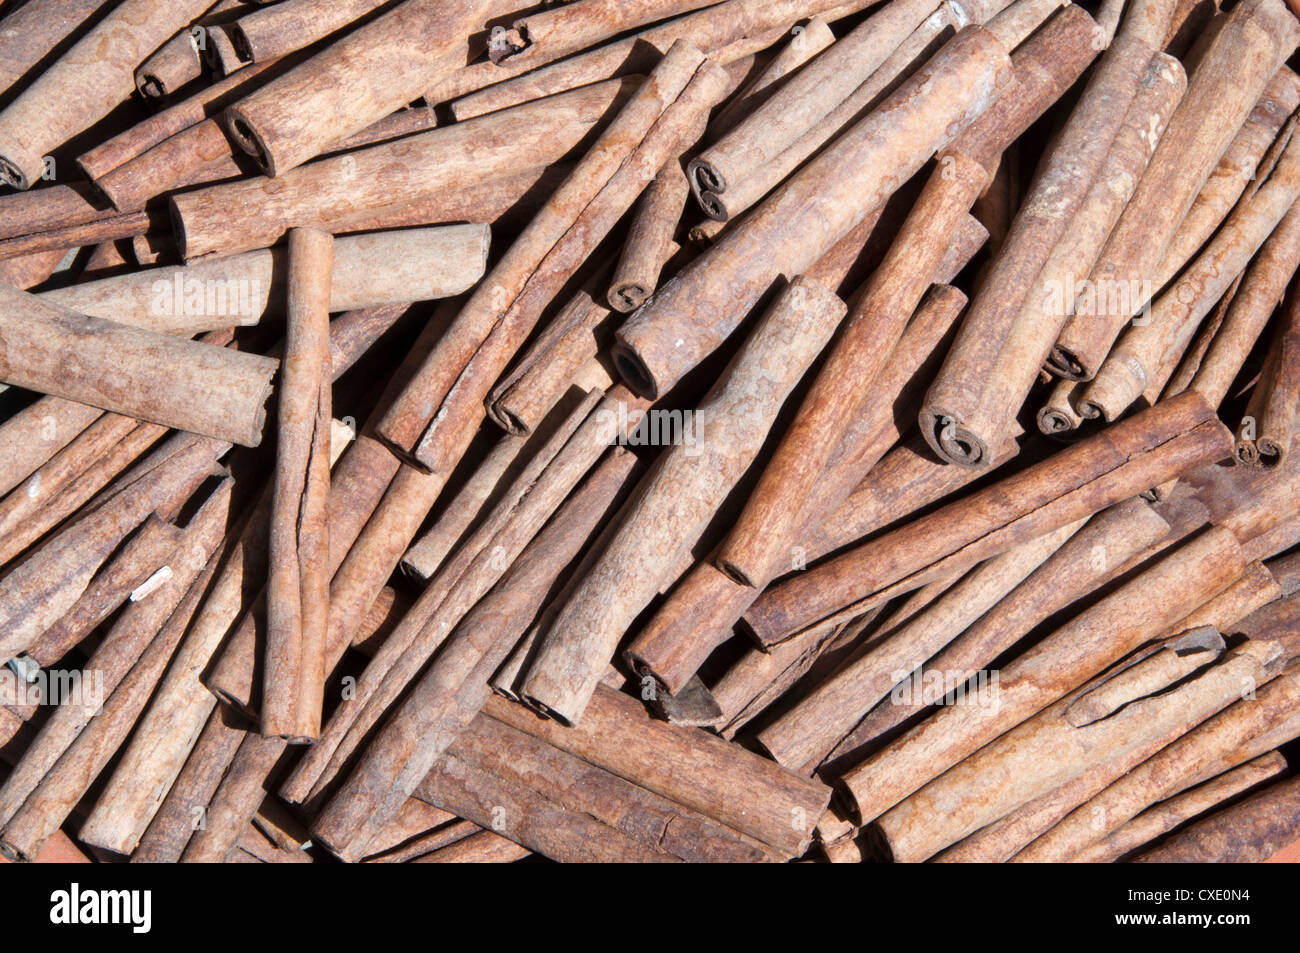 Cinnamon sticks Stock Photo